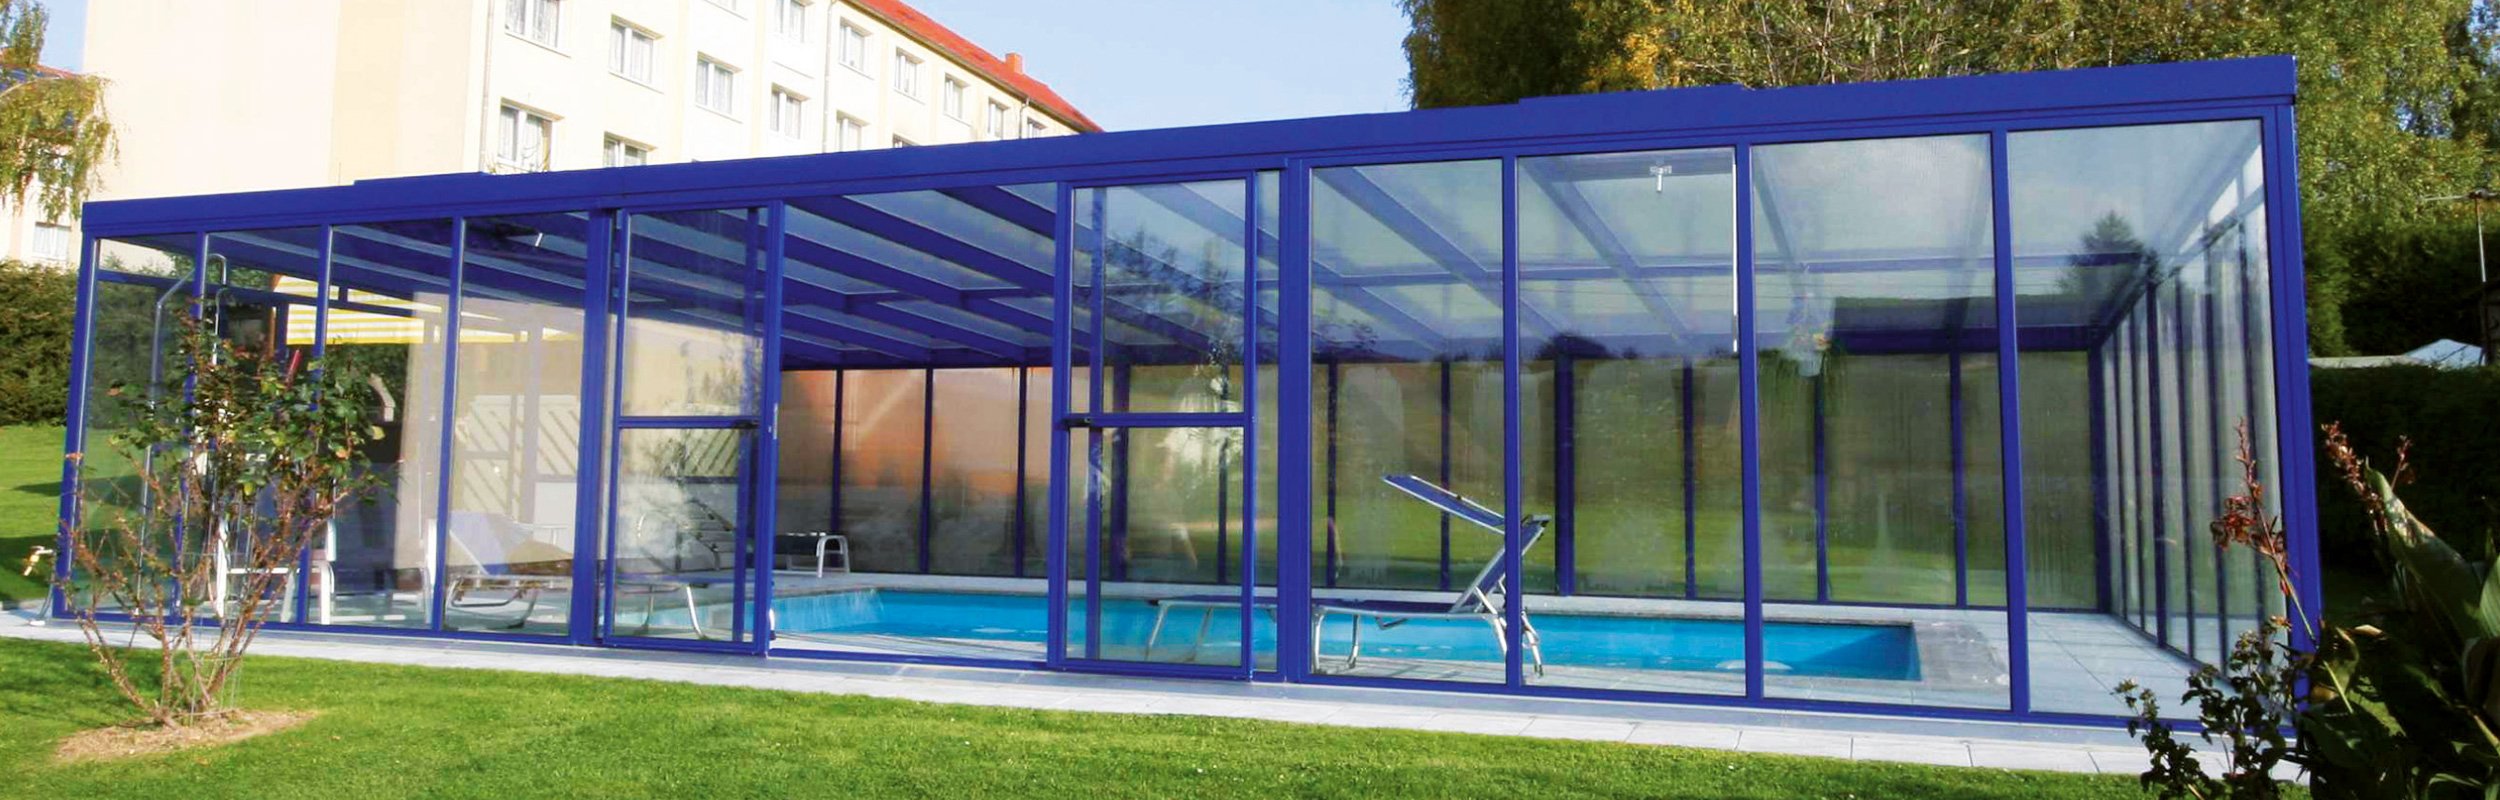 Swimming pool enclosure Rügen in blue